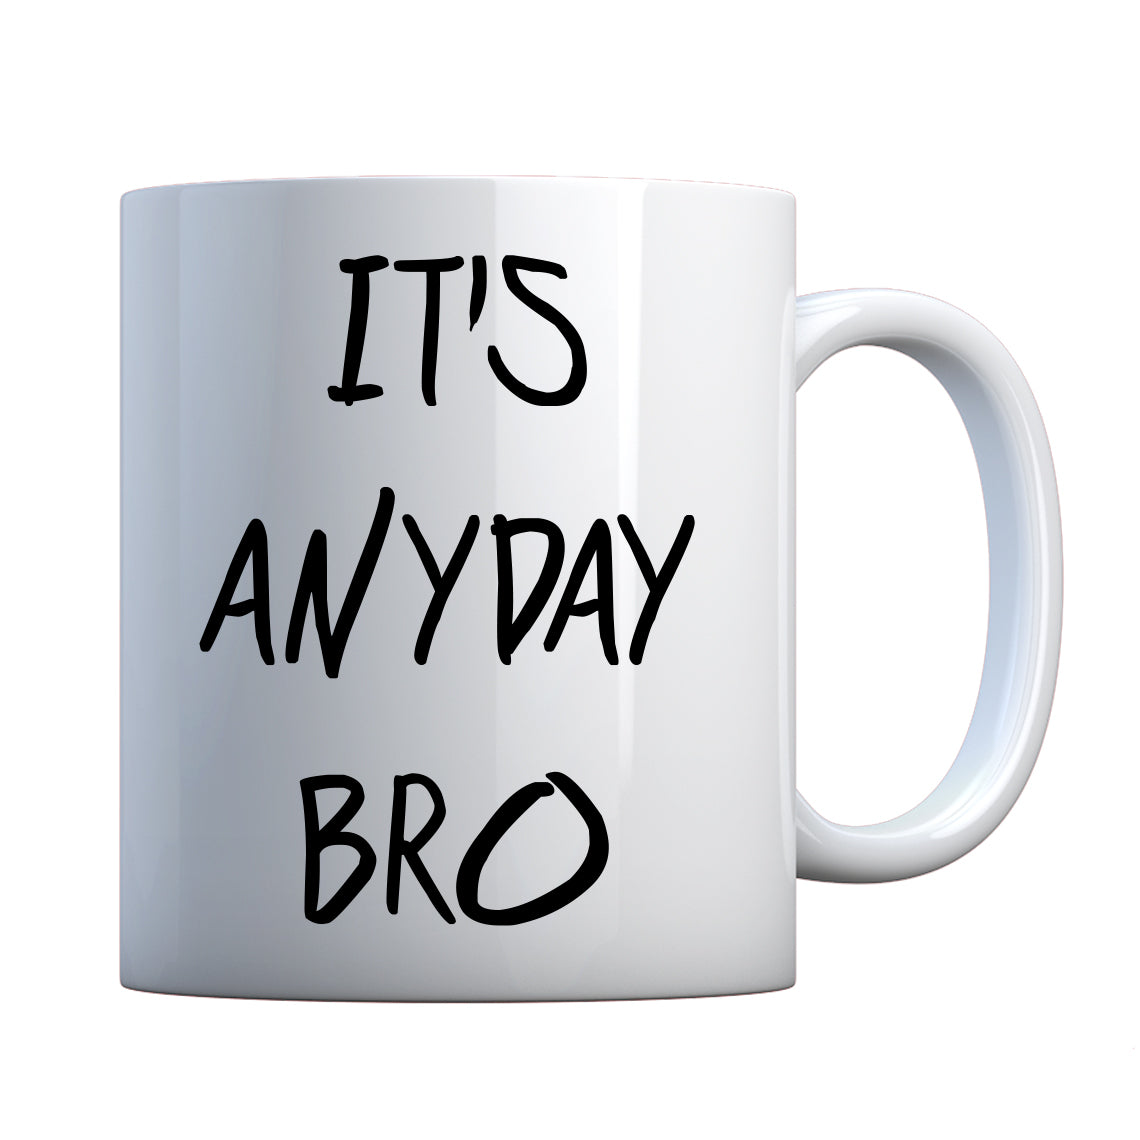 Mug Its Anyday Bro Ceramic Gift Mug